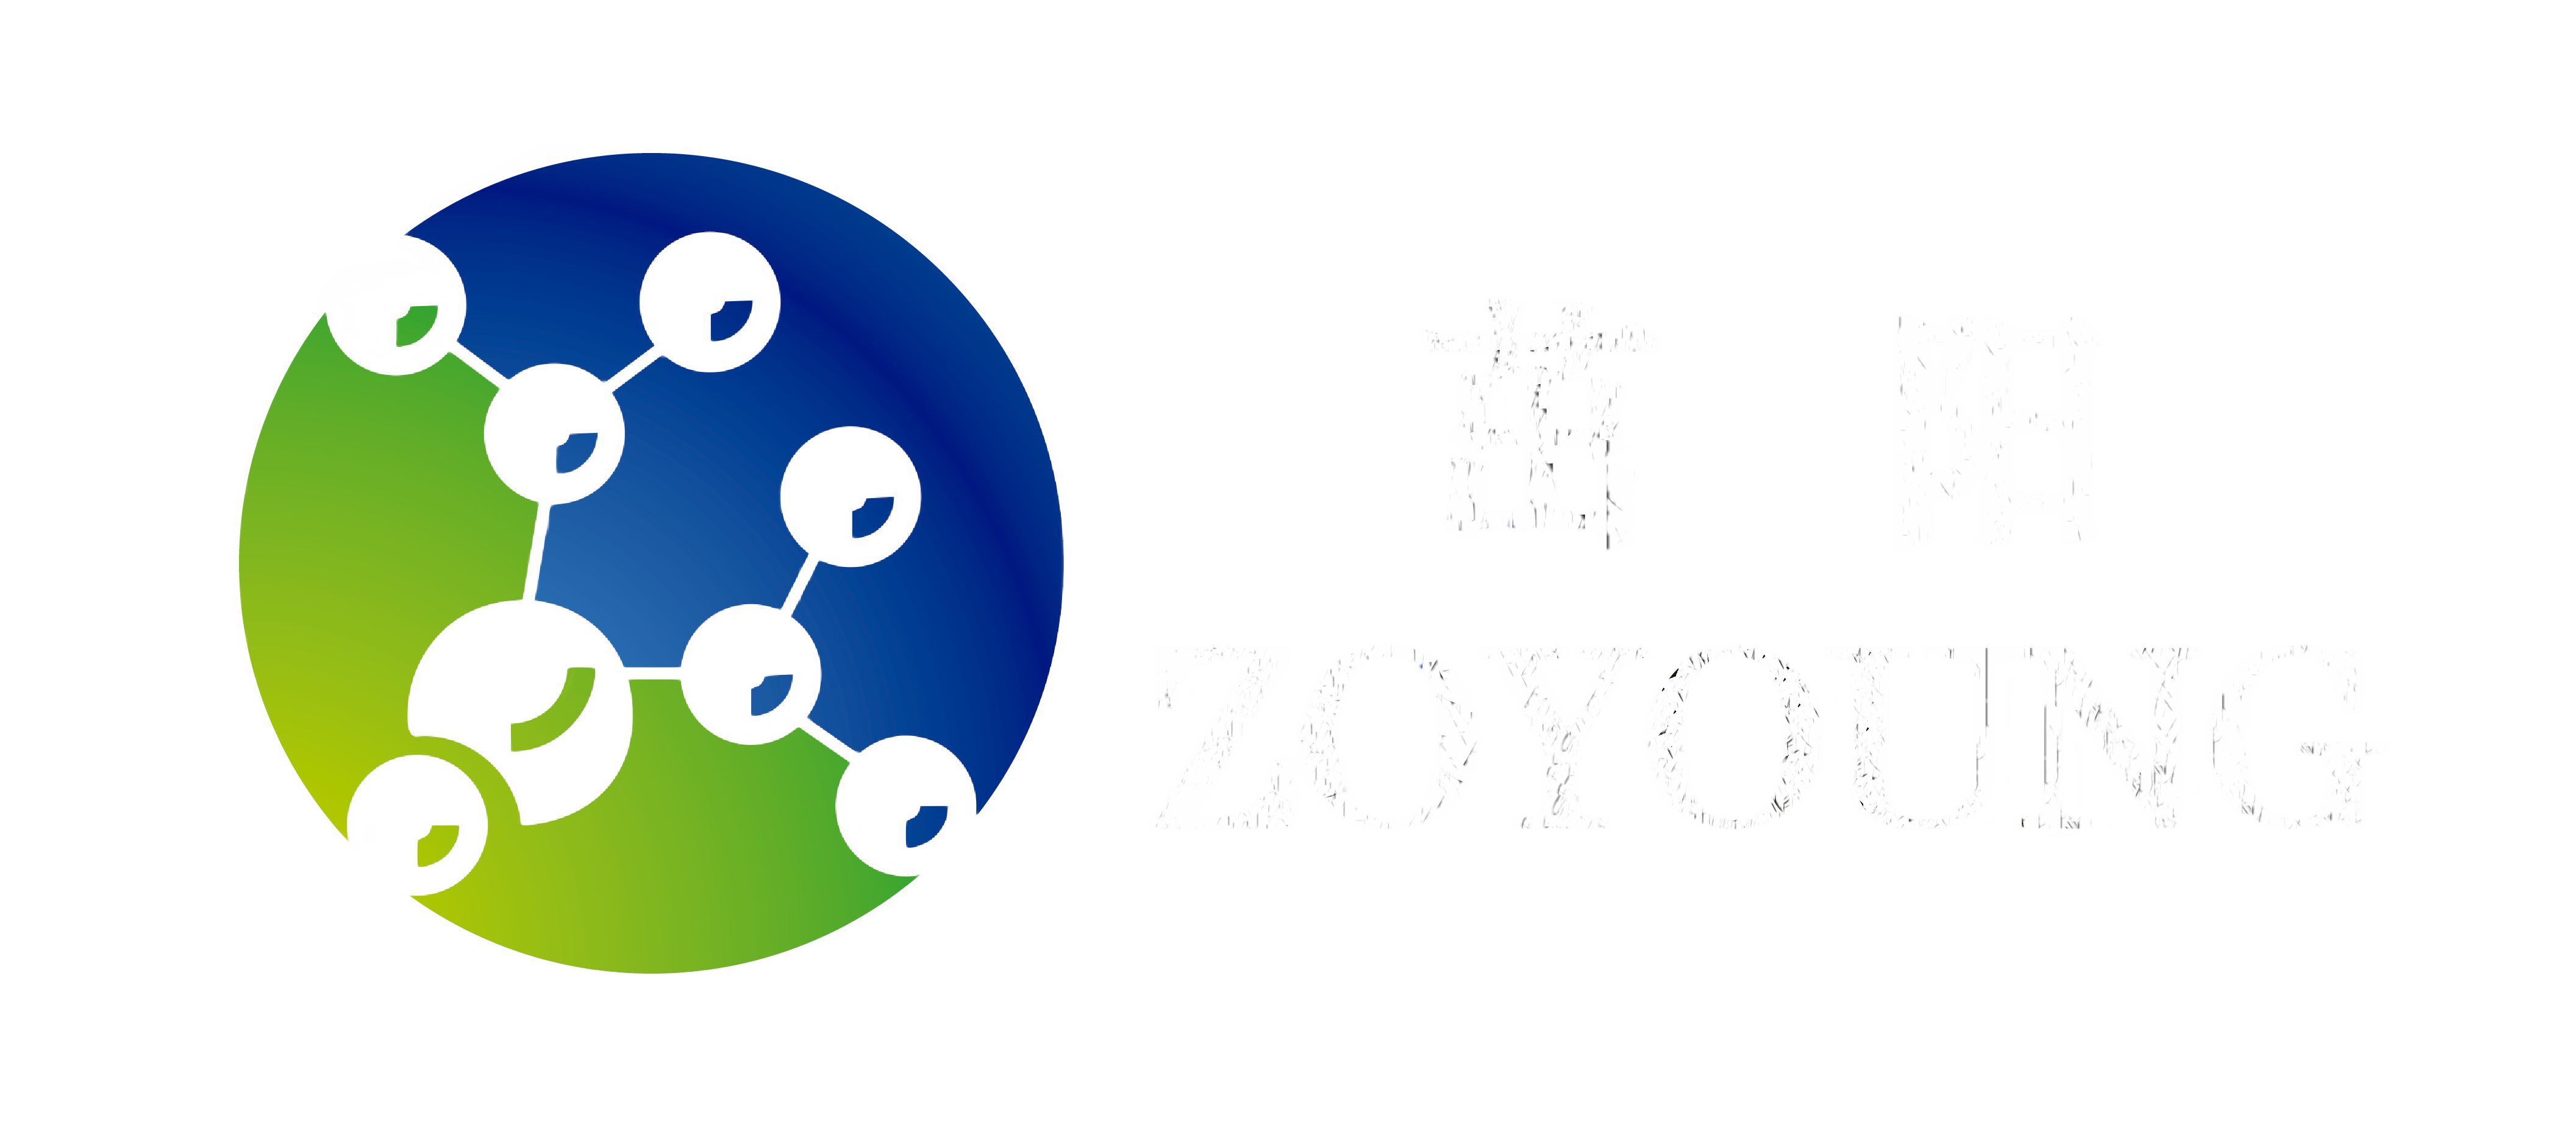 XUZHOU ZOYOUNG NEW MATERIAL TECHNOLOGY CO., LTD